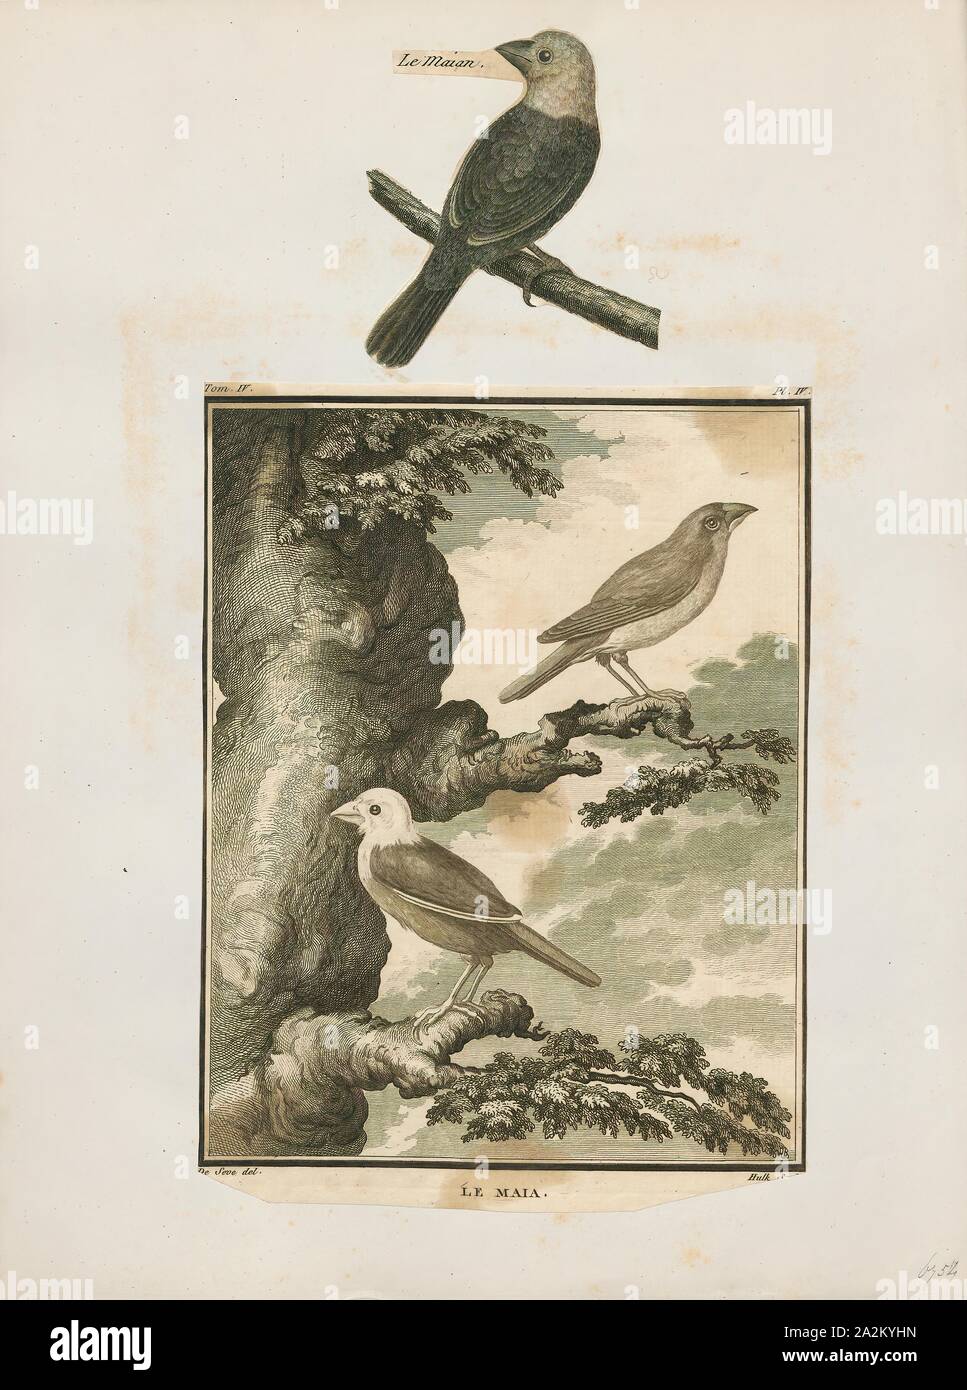 Amadina maja, Print, Amadina is a genus of estrildid finches. Established by William John Swainson in 1827, 1700-1880 Stock Photo